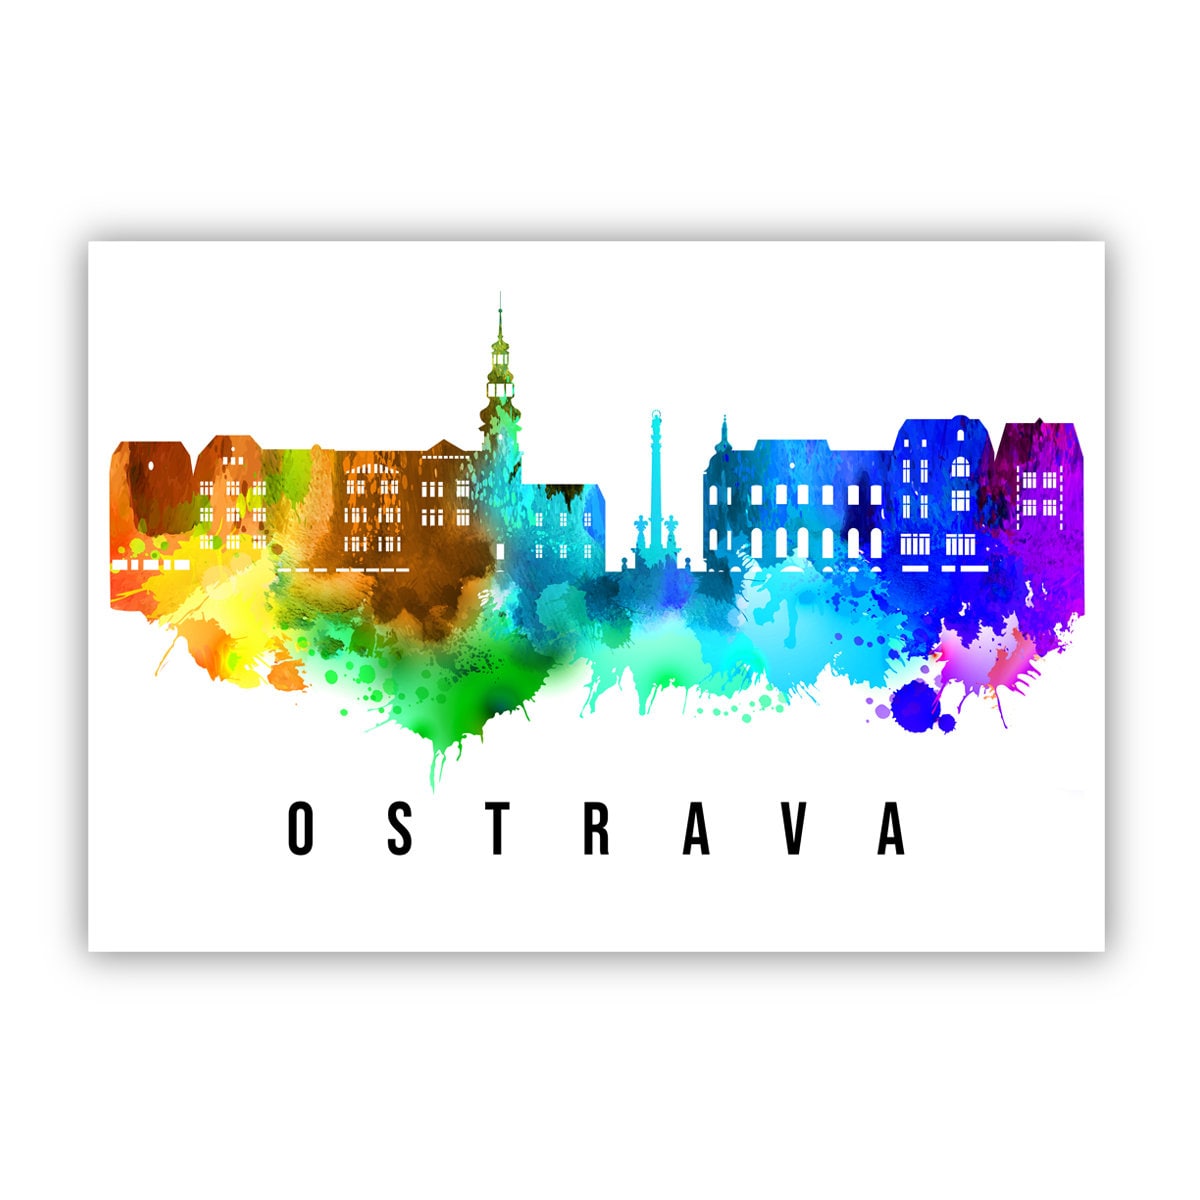 Ostrava Czech Republic Poster, Skyline poster cityscape poster, Landmark City Illustration poster, Home wall decoration, Office wall art